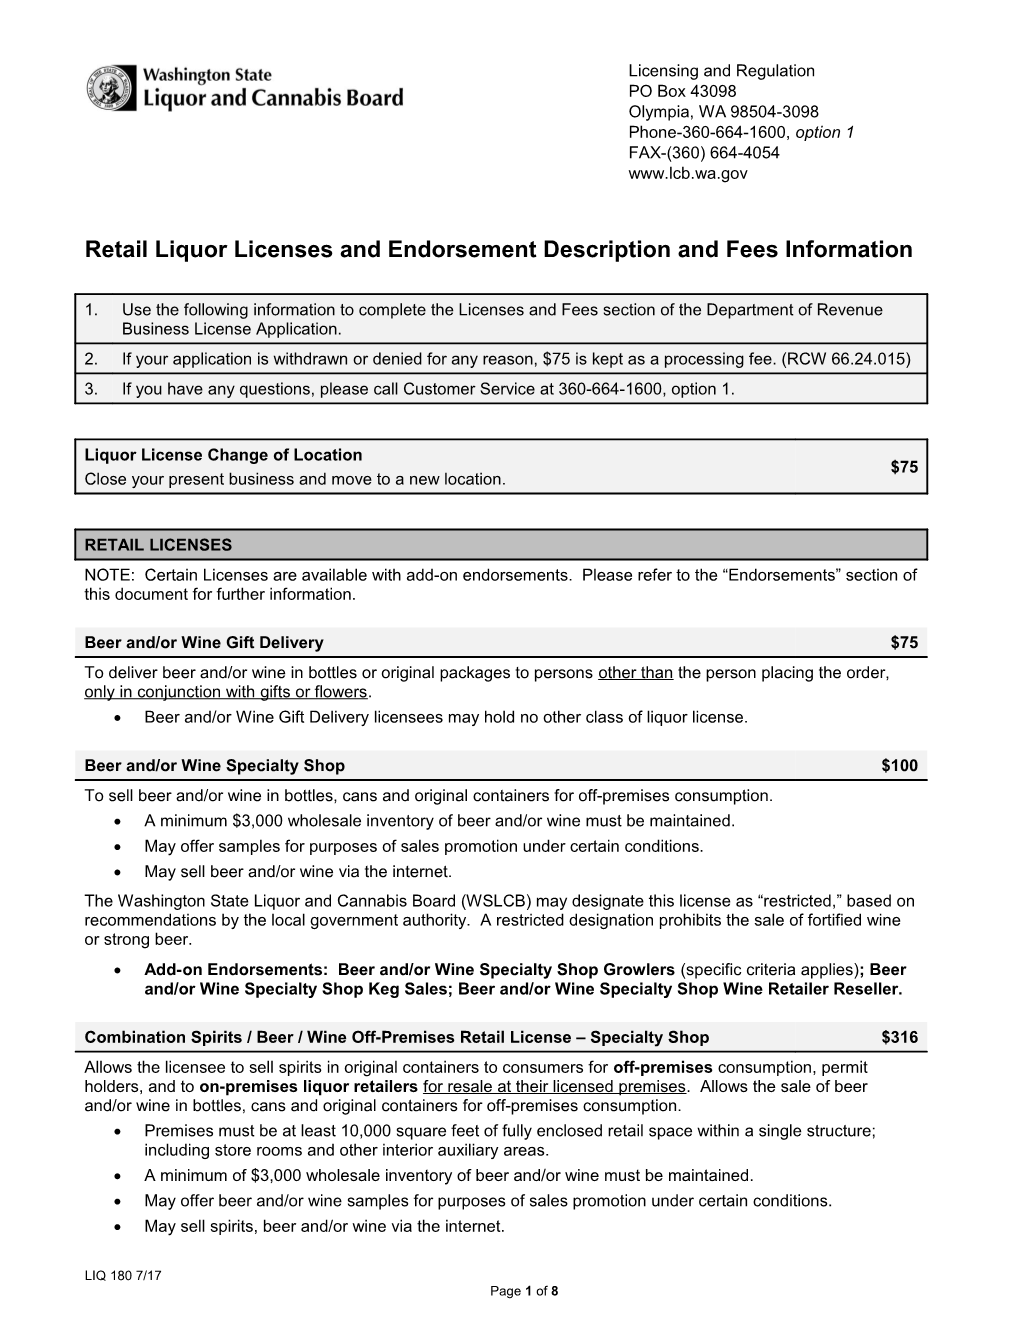 Retail Liquor License Descriptions and Fees